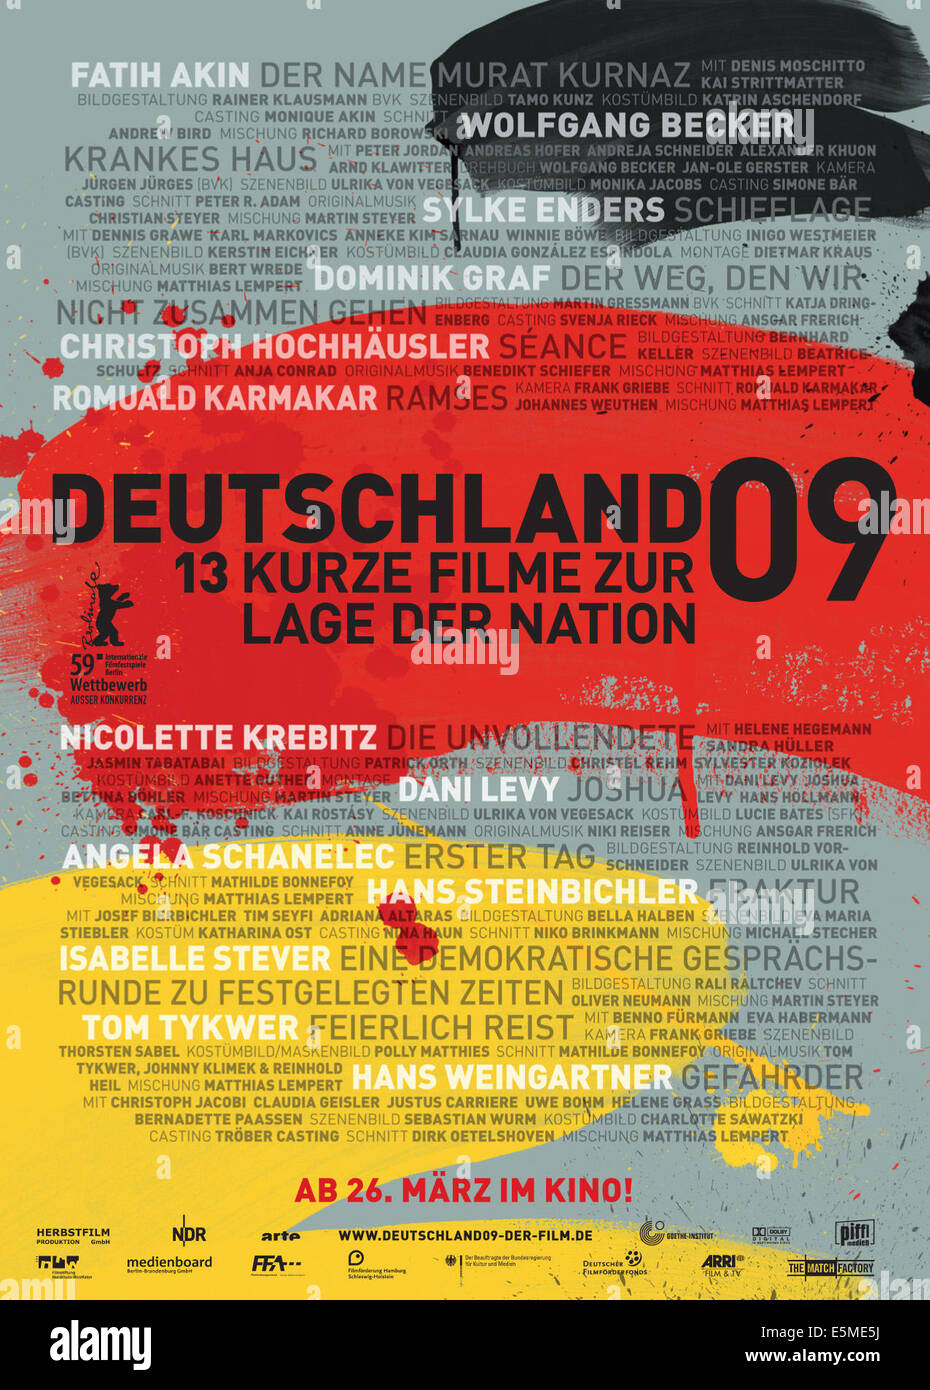 GERMANY 09: 13 SHORT FILMS ABOUT THE STATE OF THE NATION, (aka DEUTSCHLAND 09 - 13 KURZE FILME ZUR LAGE DER NATION), 2009. Stock Photo